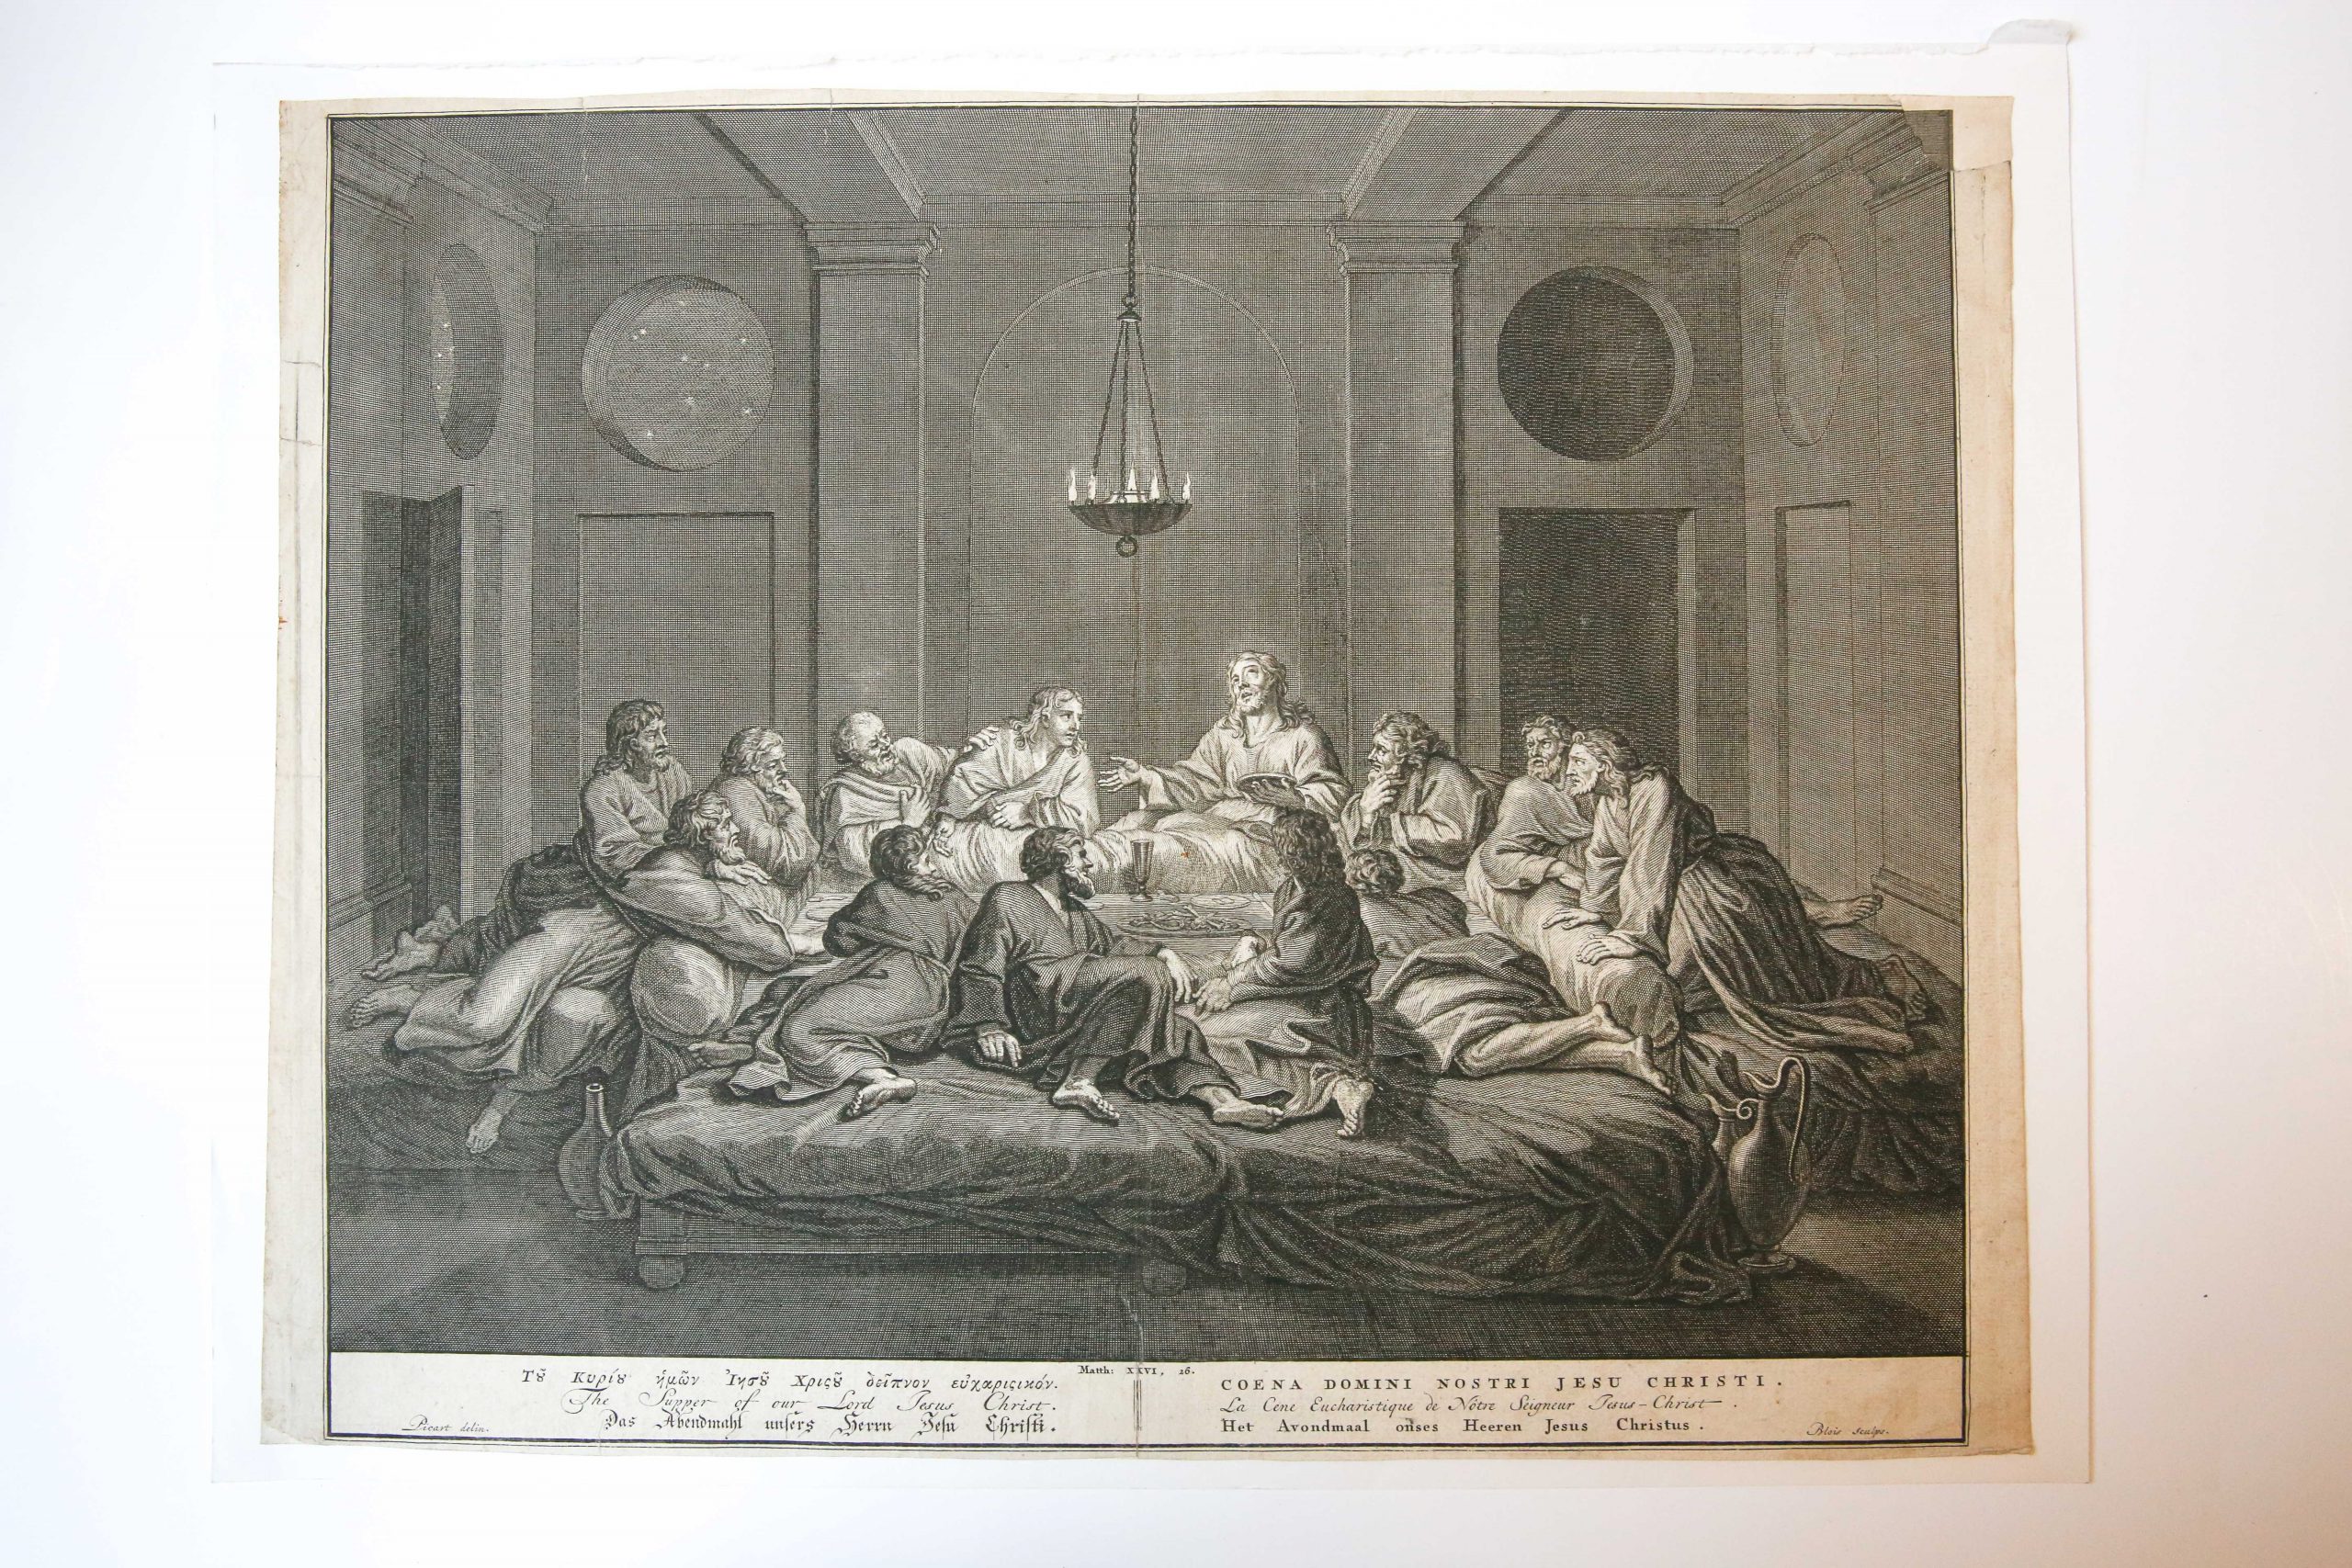 [Antique print, engraving] Het Avondmaal onses Heeren Jesus Christus; The Last Supper, published 1728.